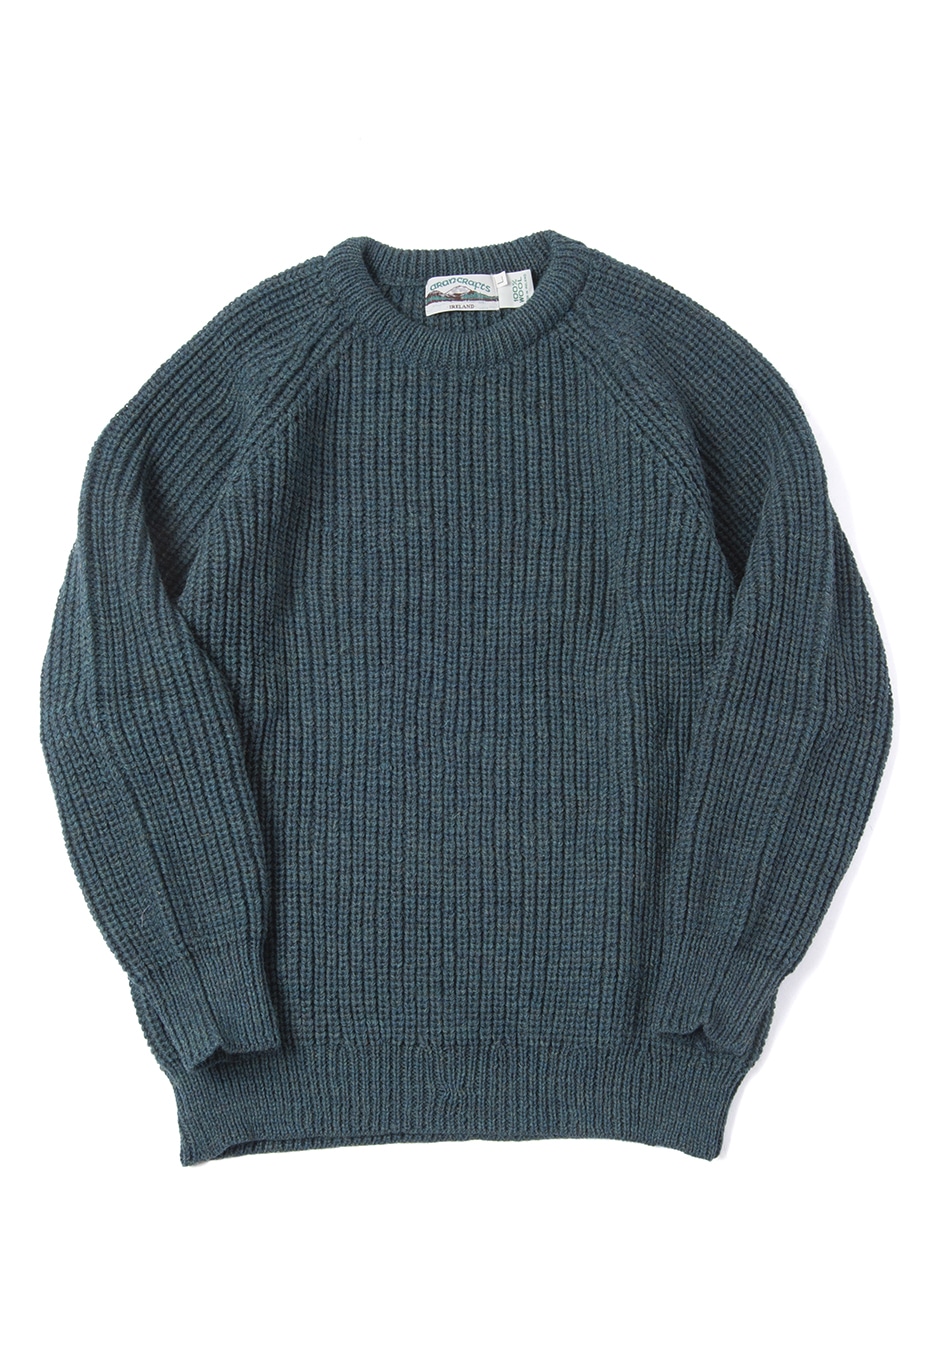 Wool sweater - fisherman's rib crew neck, Aran Crafts: C 761